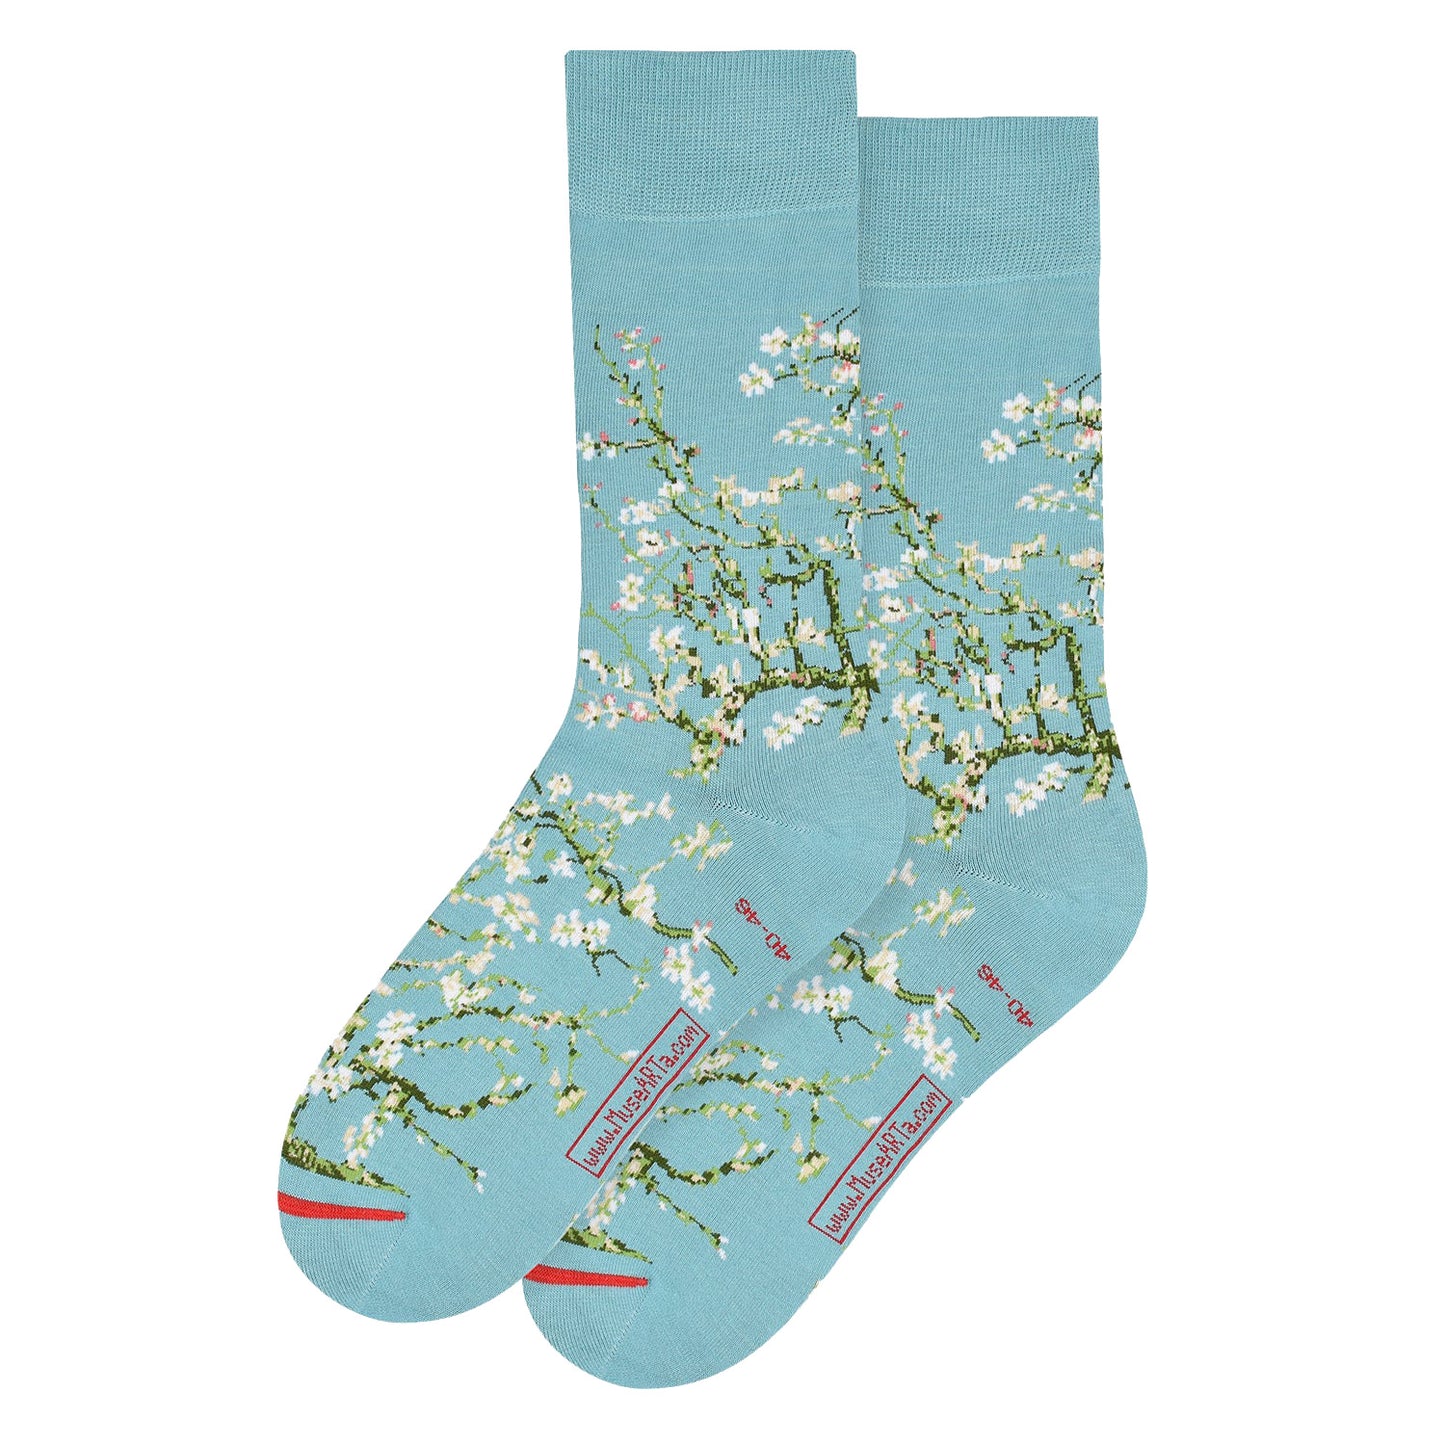 Van Gogh's Almond Blossom Socks